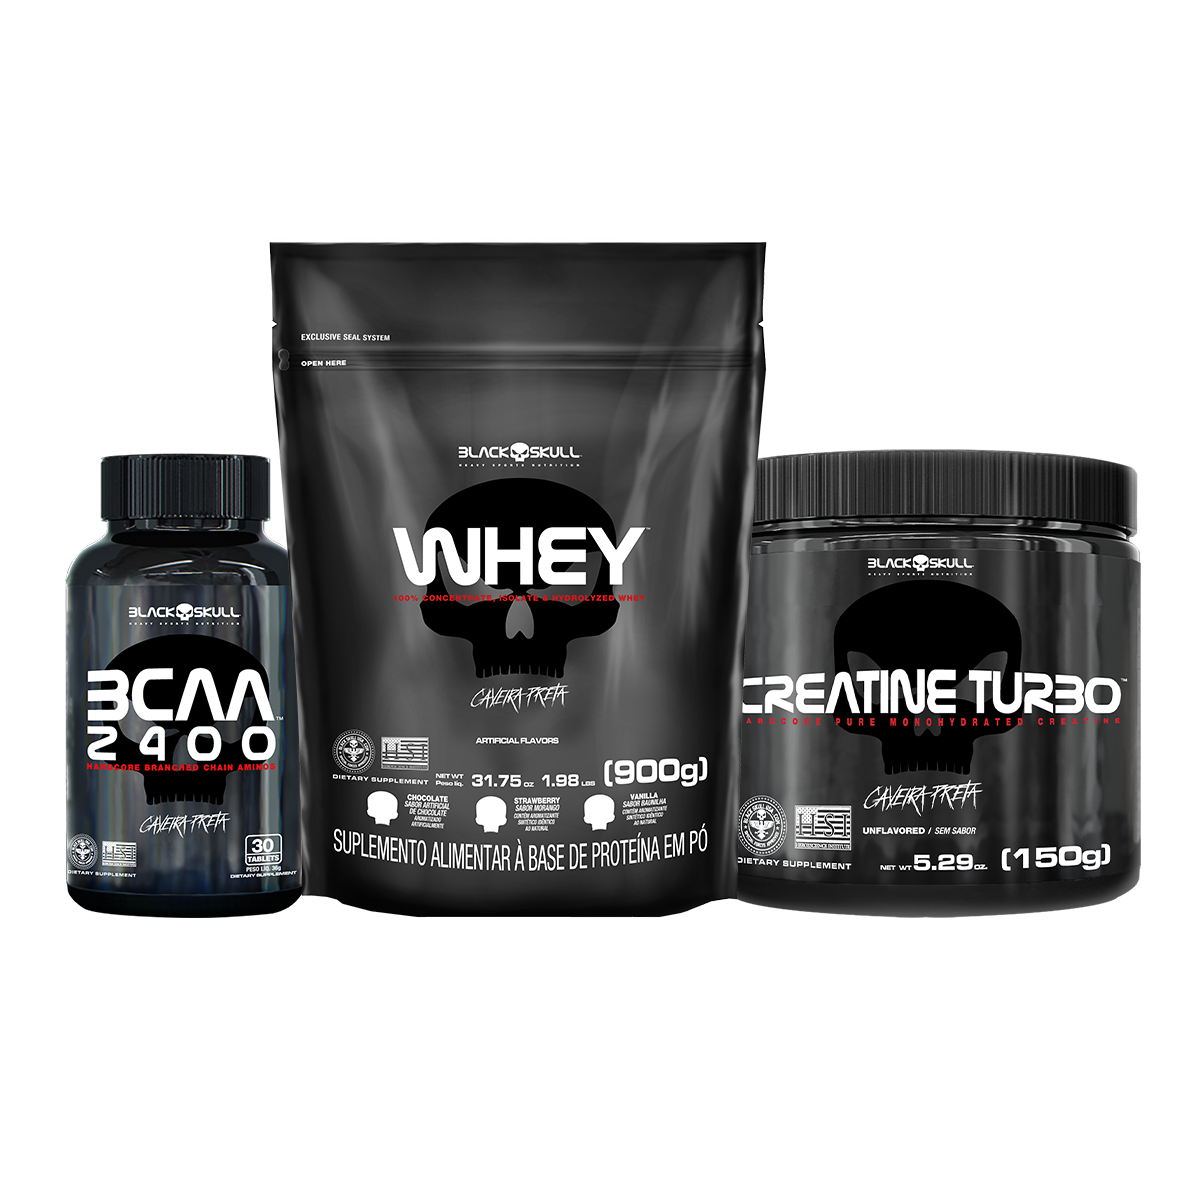 Sports Nutrition Supplements Bodybuilding Whey Protein Casein Bcaa Creatine  Black Stock Photo by ©maxxyustas 652748472